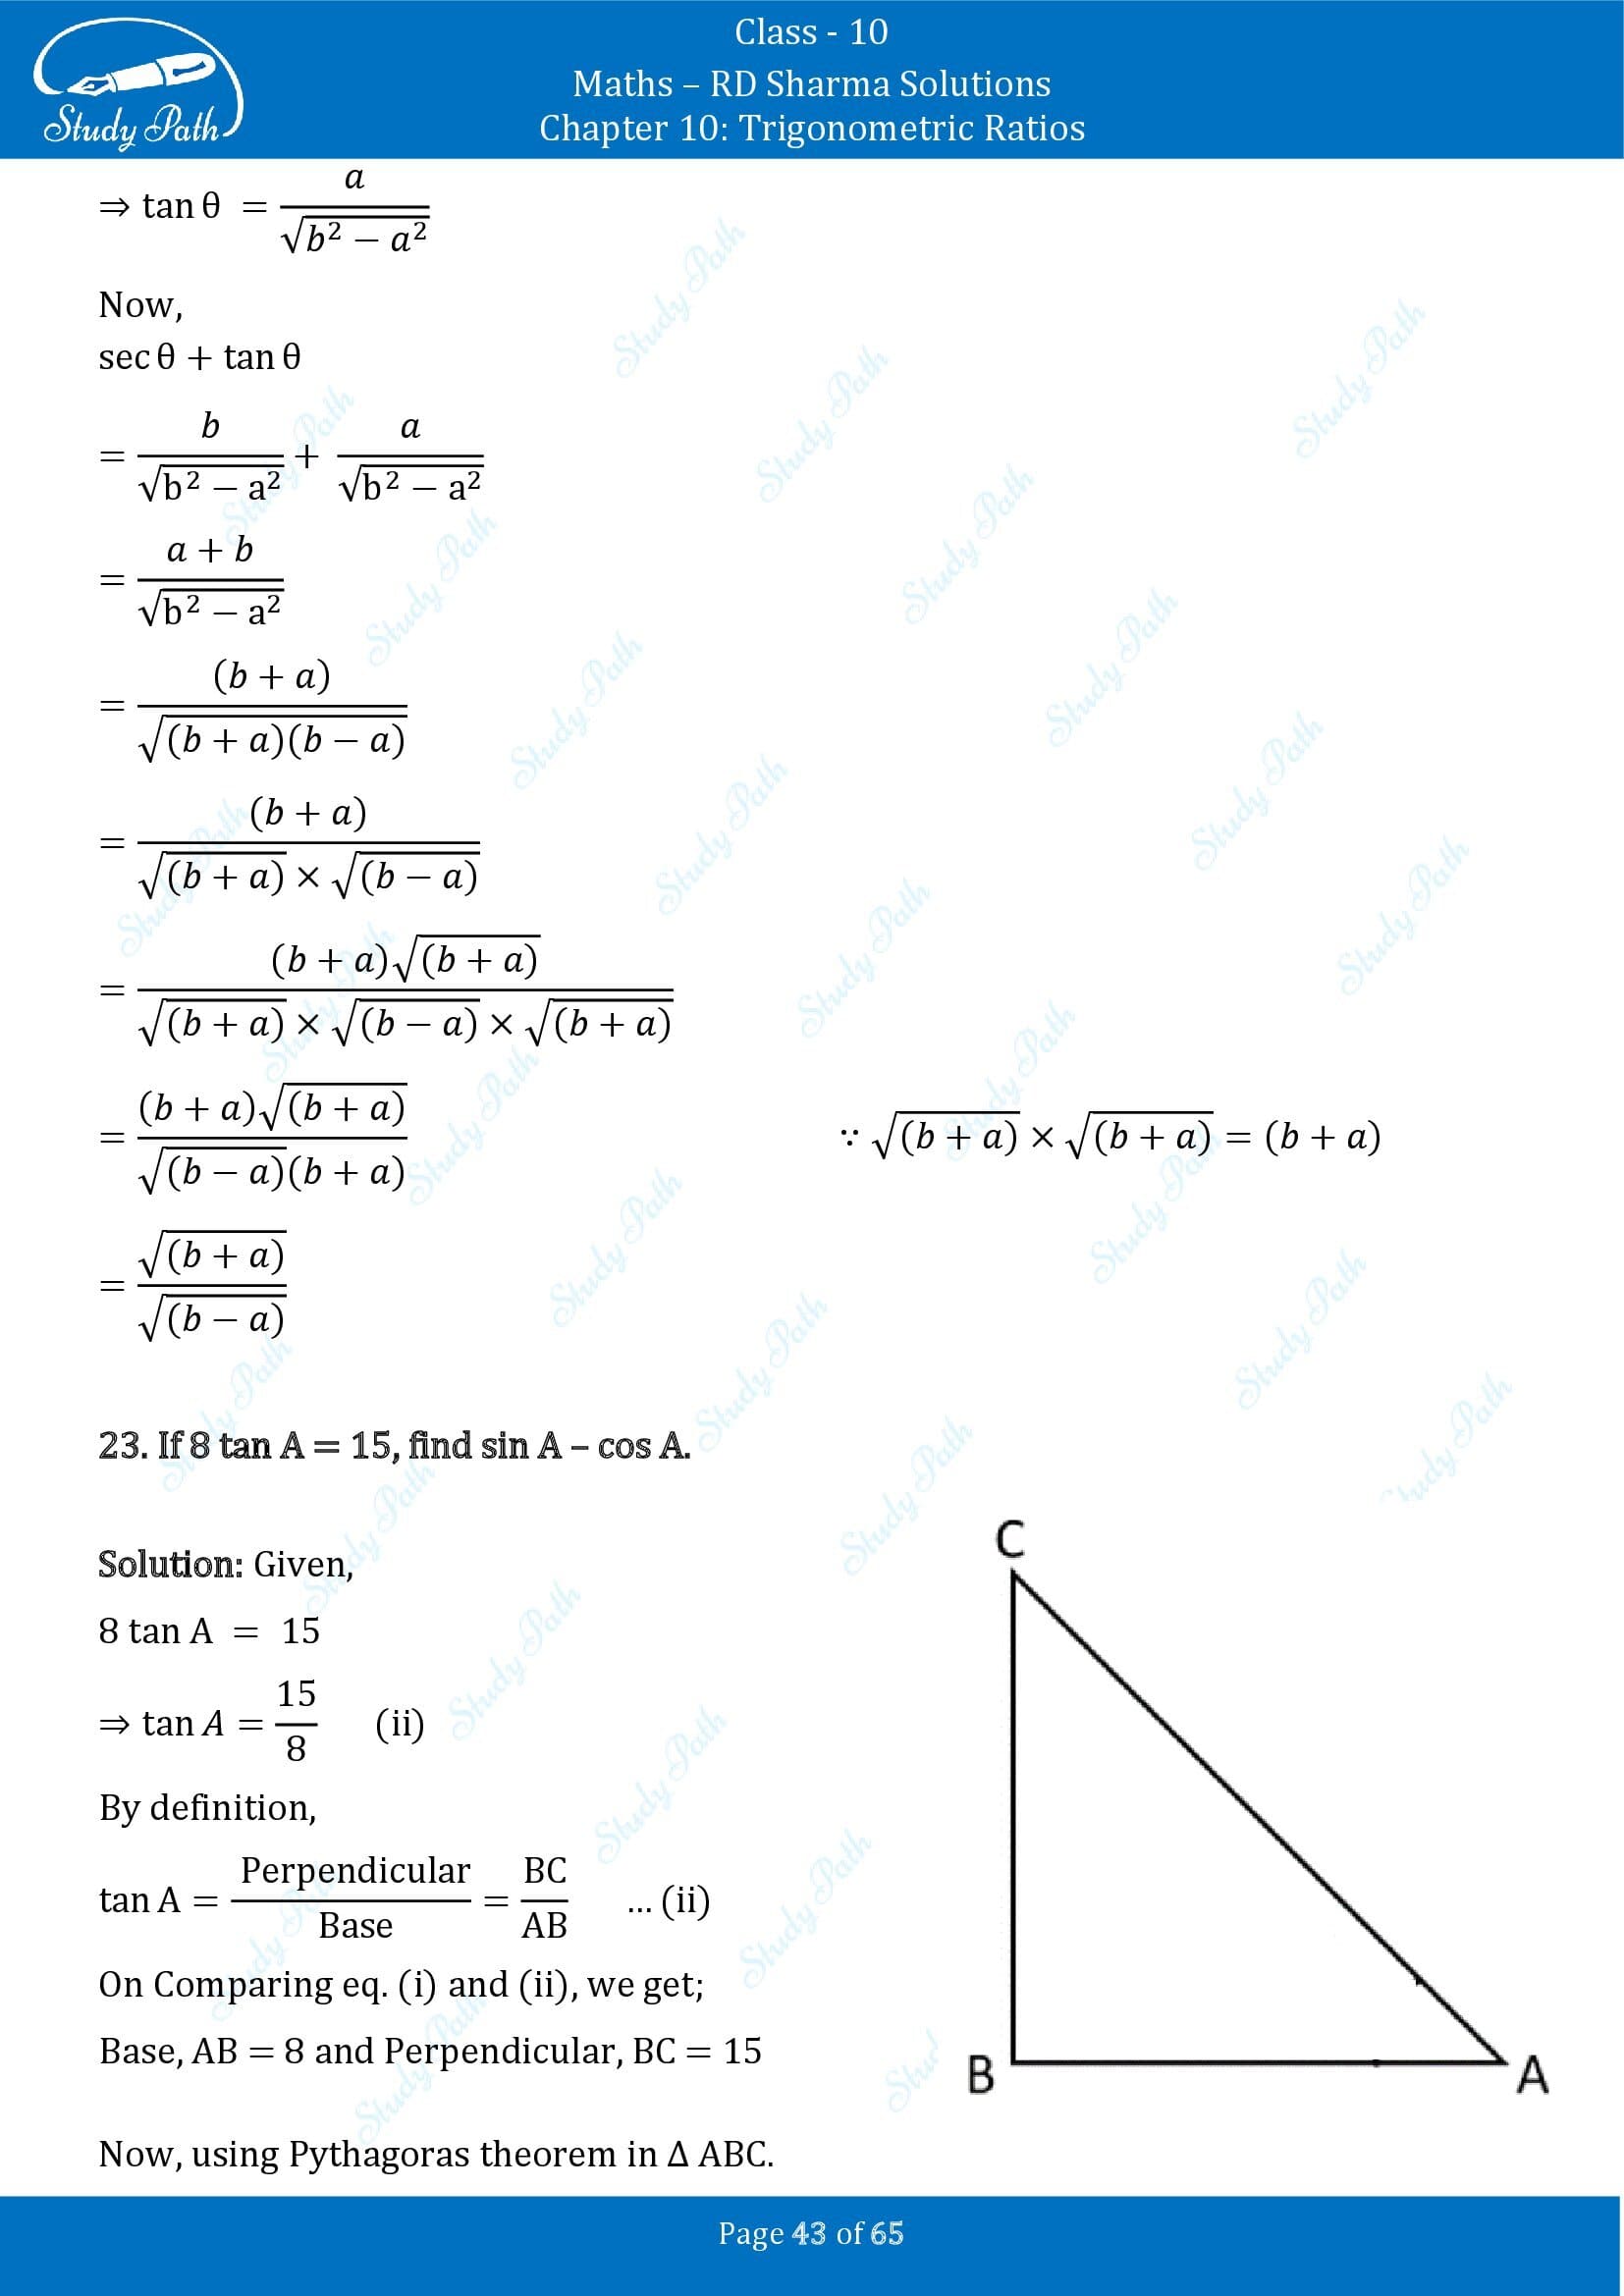 RD Sharma Solutions Class 10 Chapter 10 Trigonometric Ratios Exercise 10.1 00043